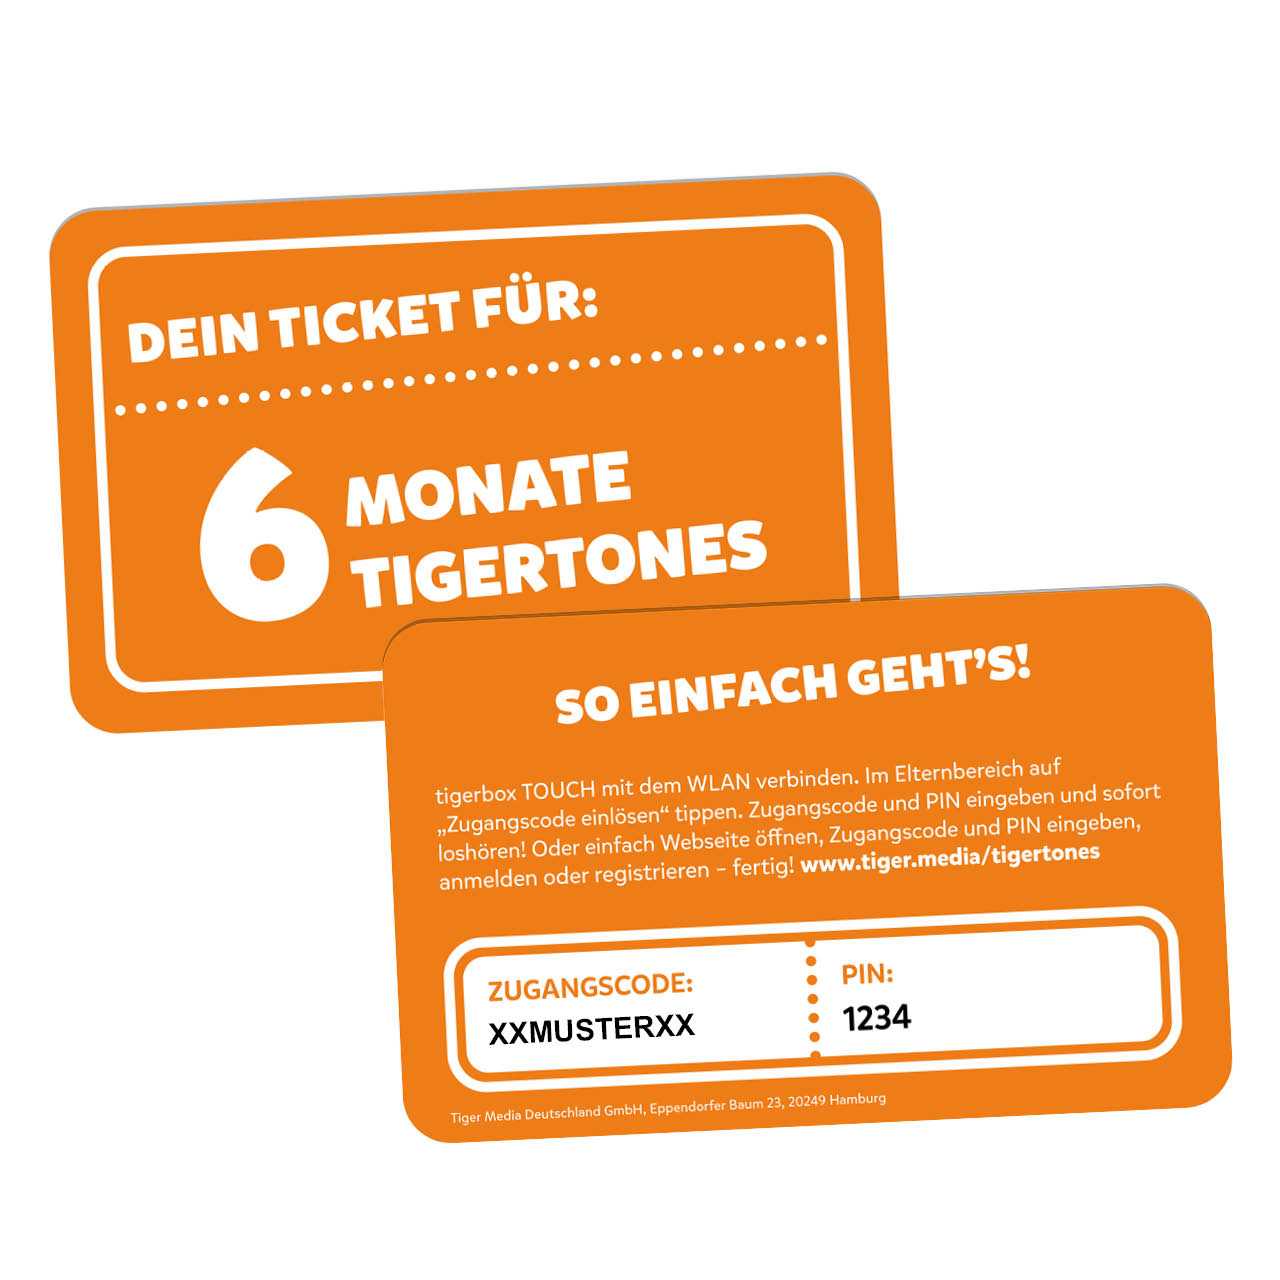 Tigerticket – 6 Monate Zugang zu tigertones